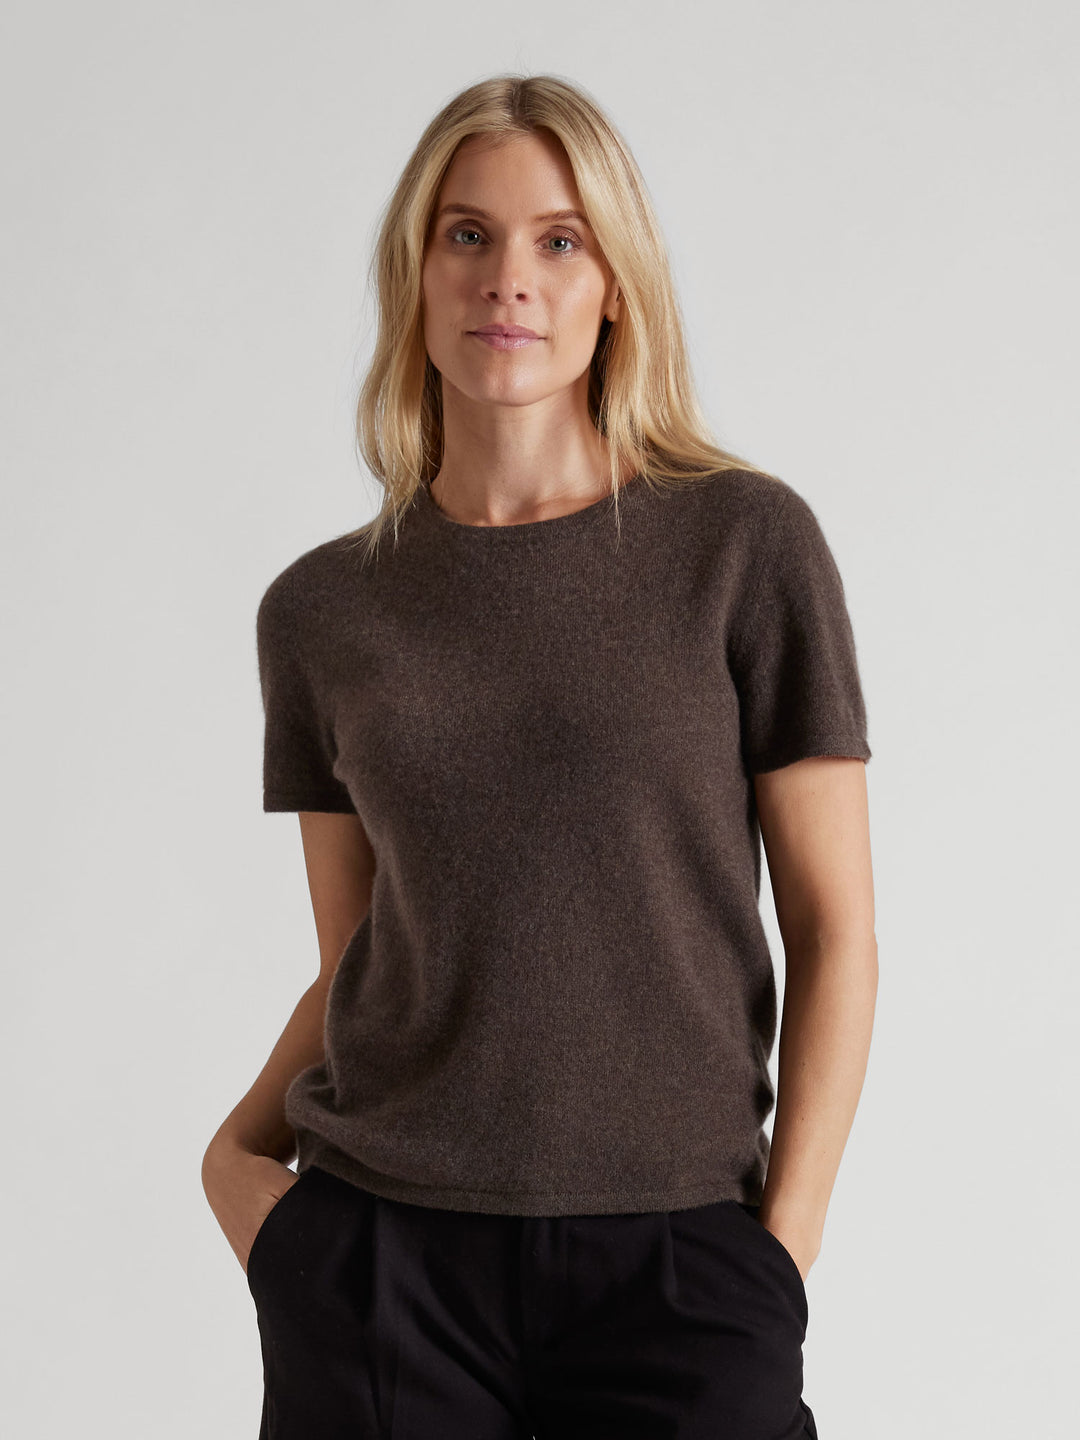 Cashmere t-shirt t-shirt "Fresh", sustainable fashion, luxury, quality. Norwegian design by Kashmina. Color: Dark Brown.